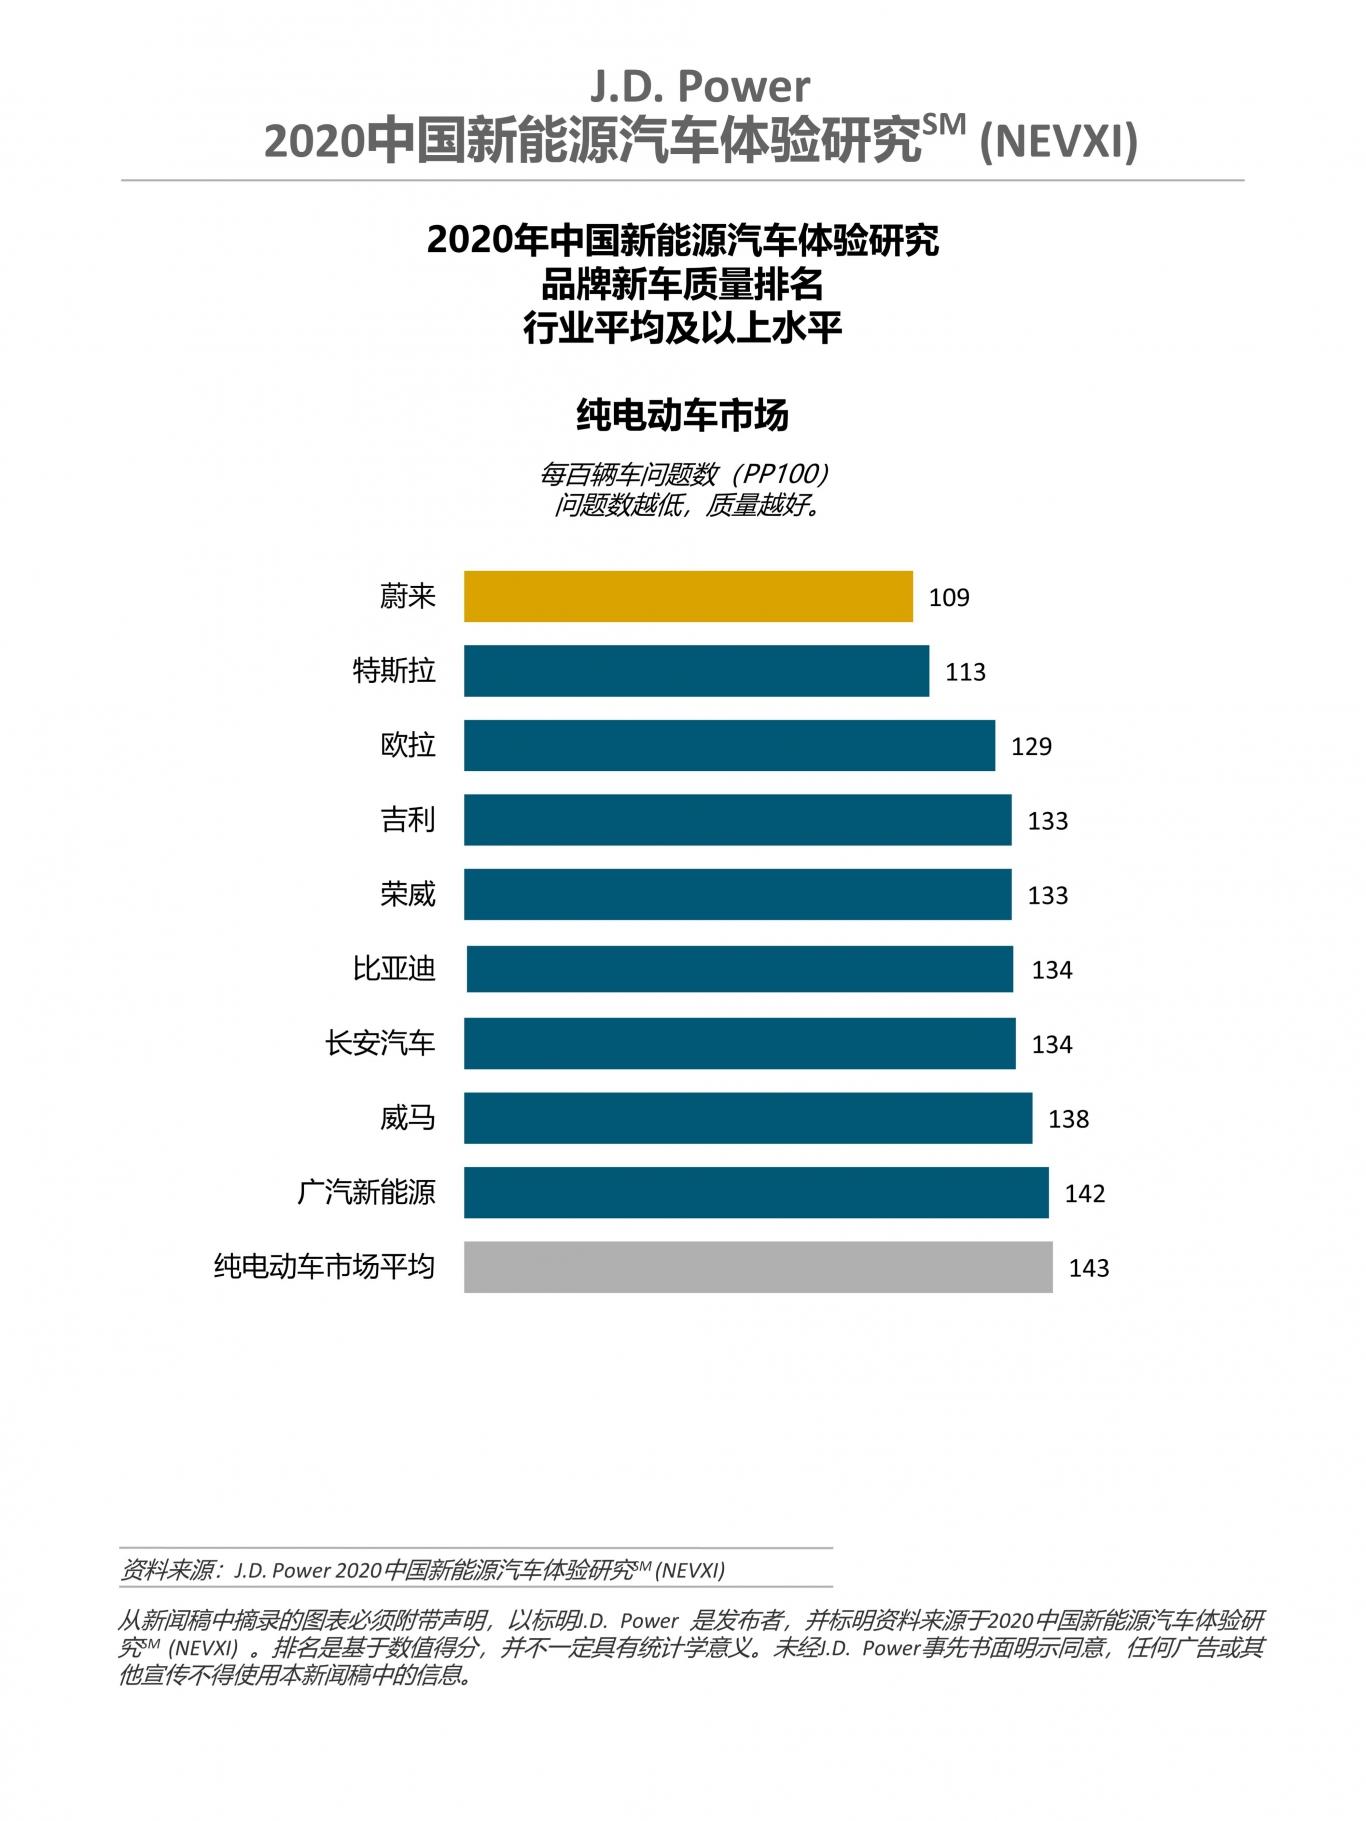 2020 China NEVXI Charts CN final_2.jpg